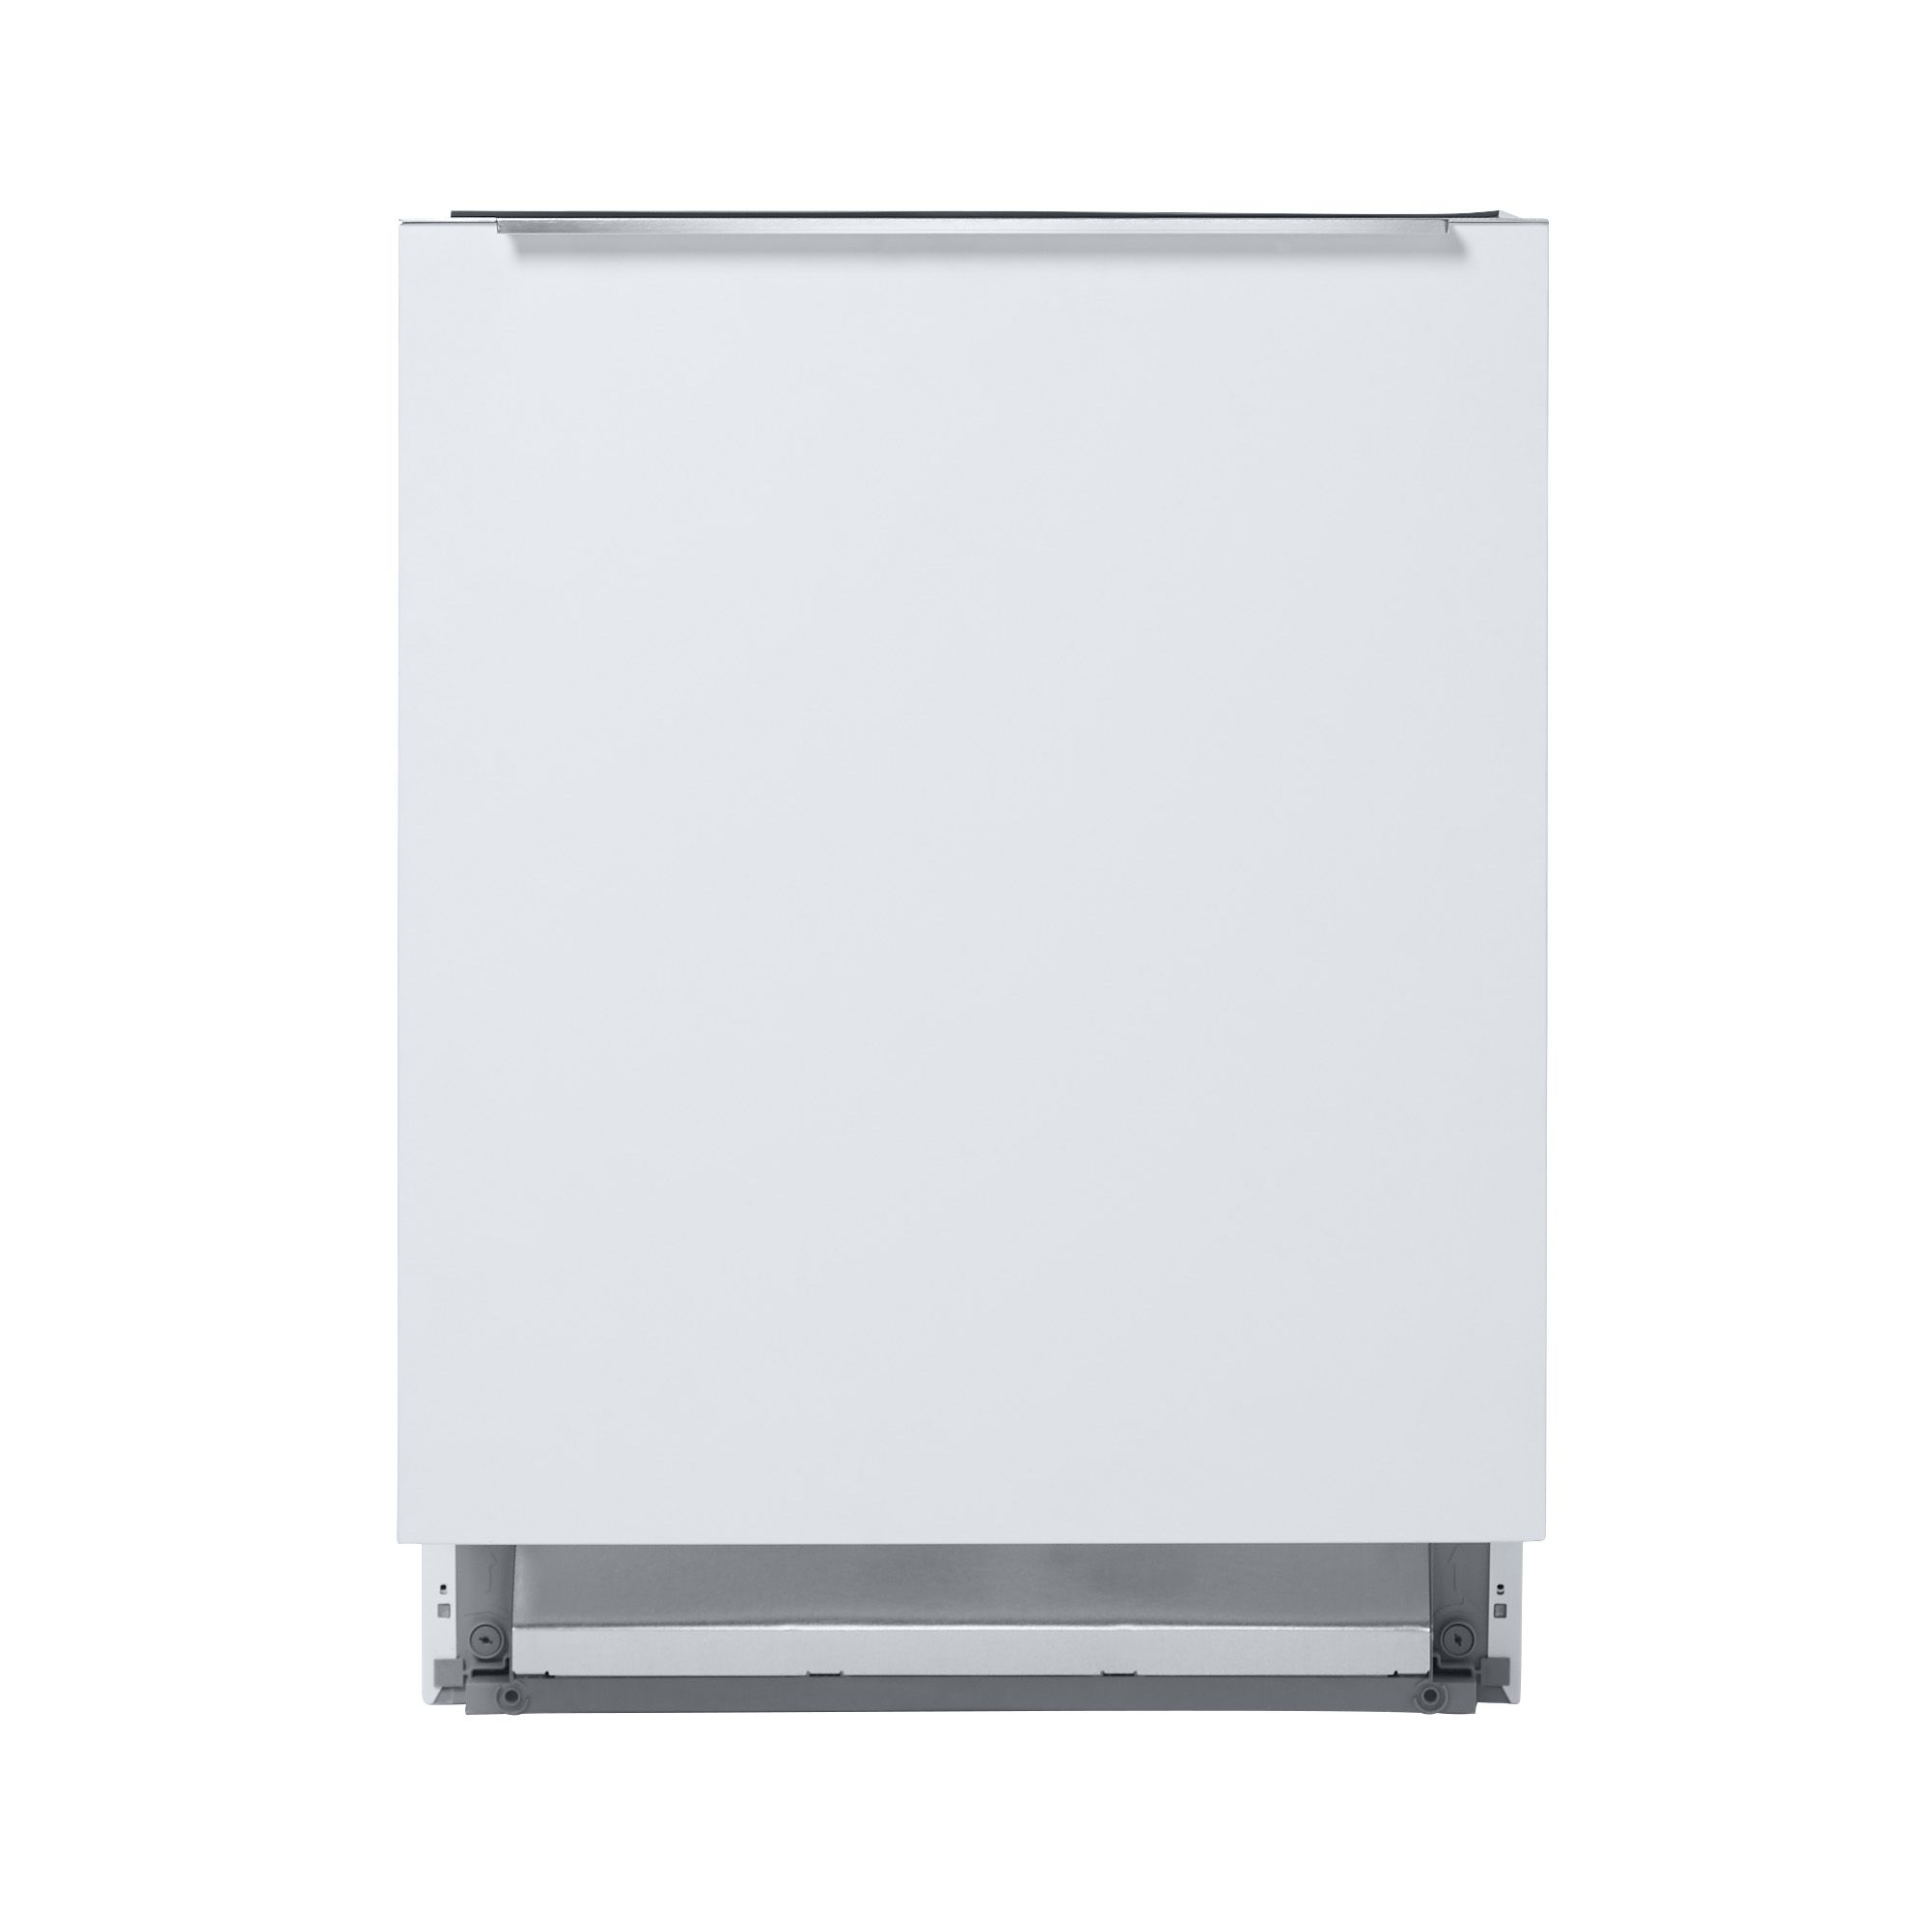 Beko DIN48Q20 Integrated Full size Dishwasher - Black & white